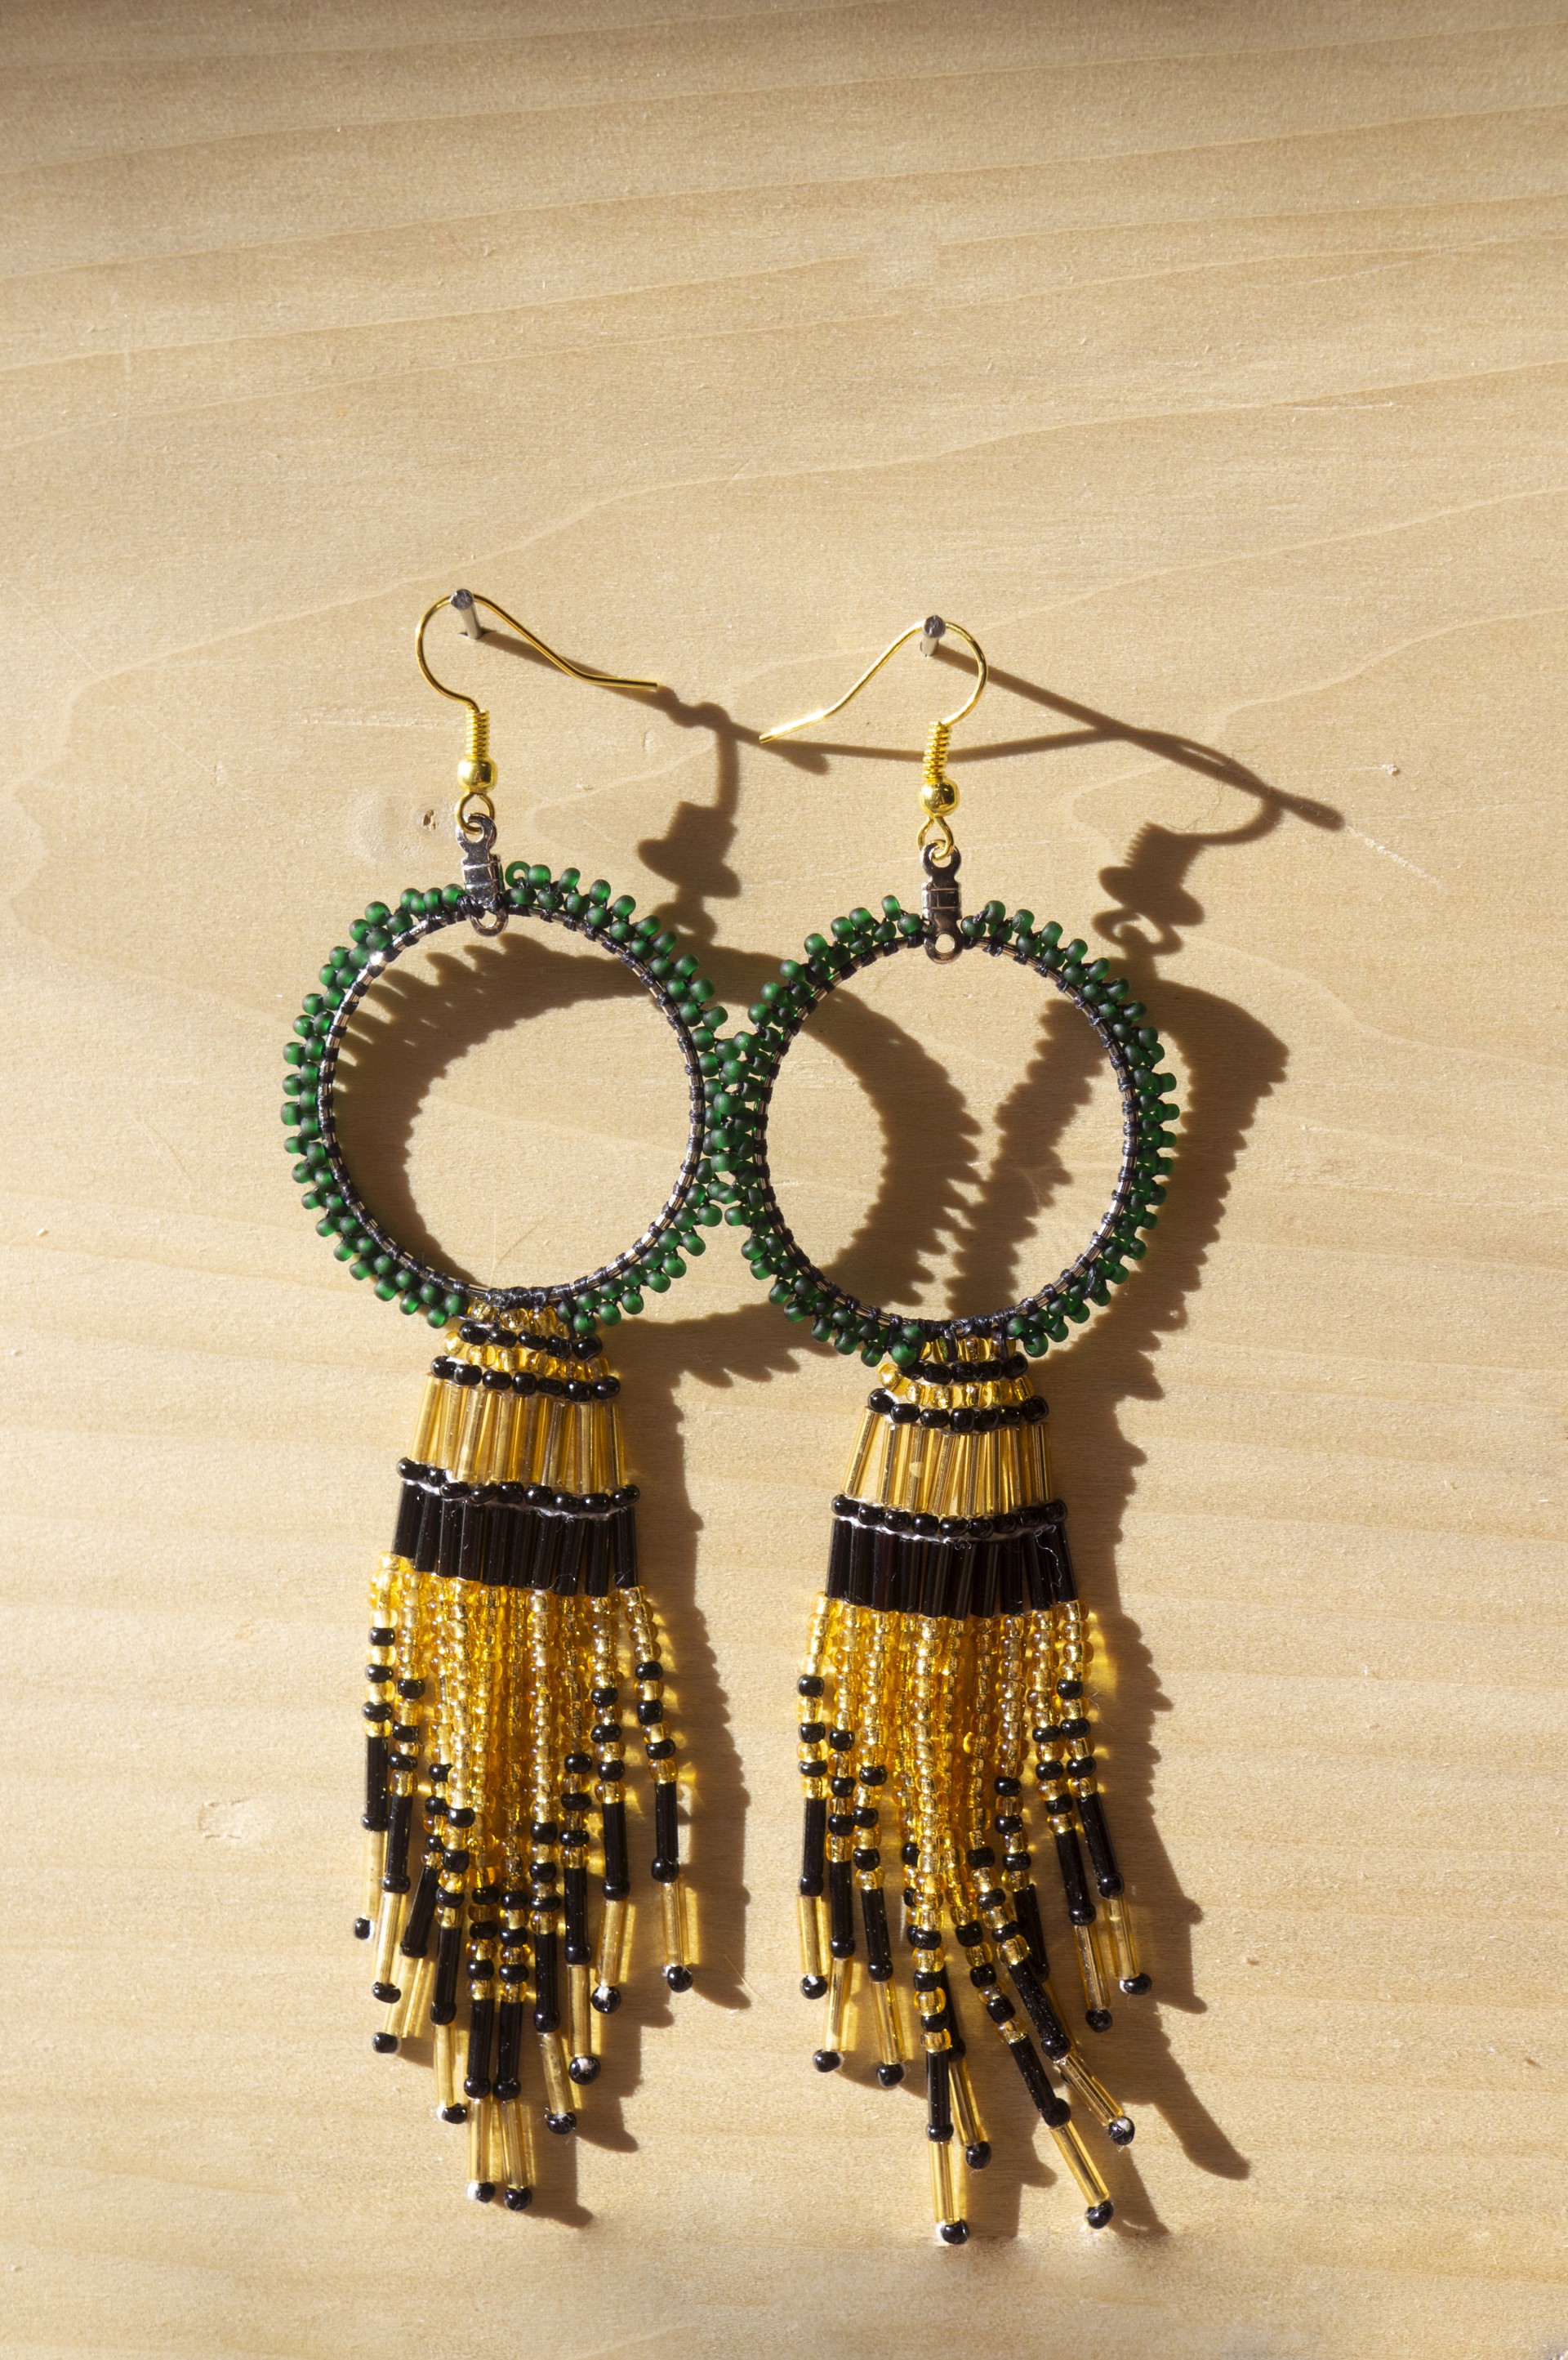 Green and Gold Earrings by Hattie Lee